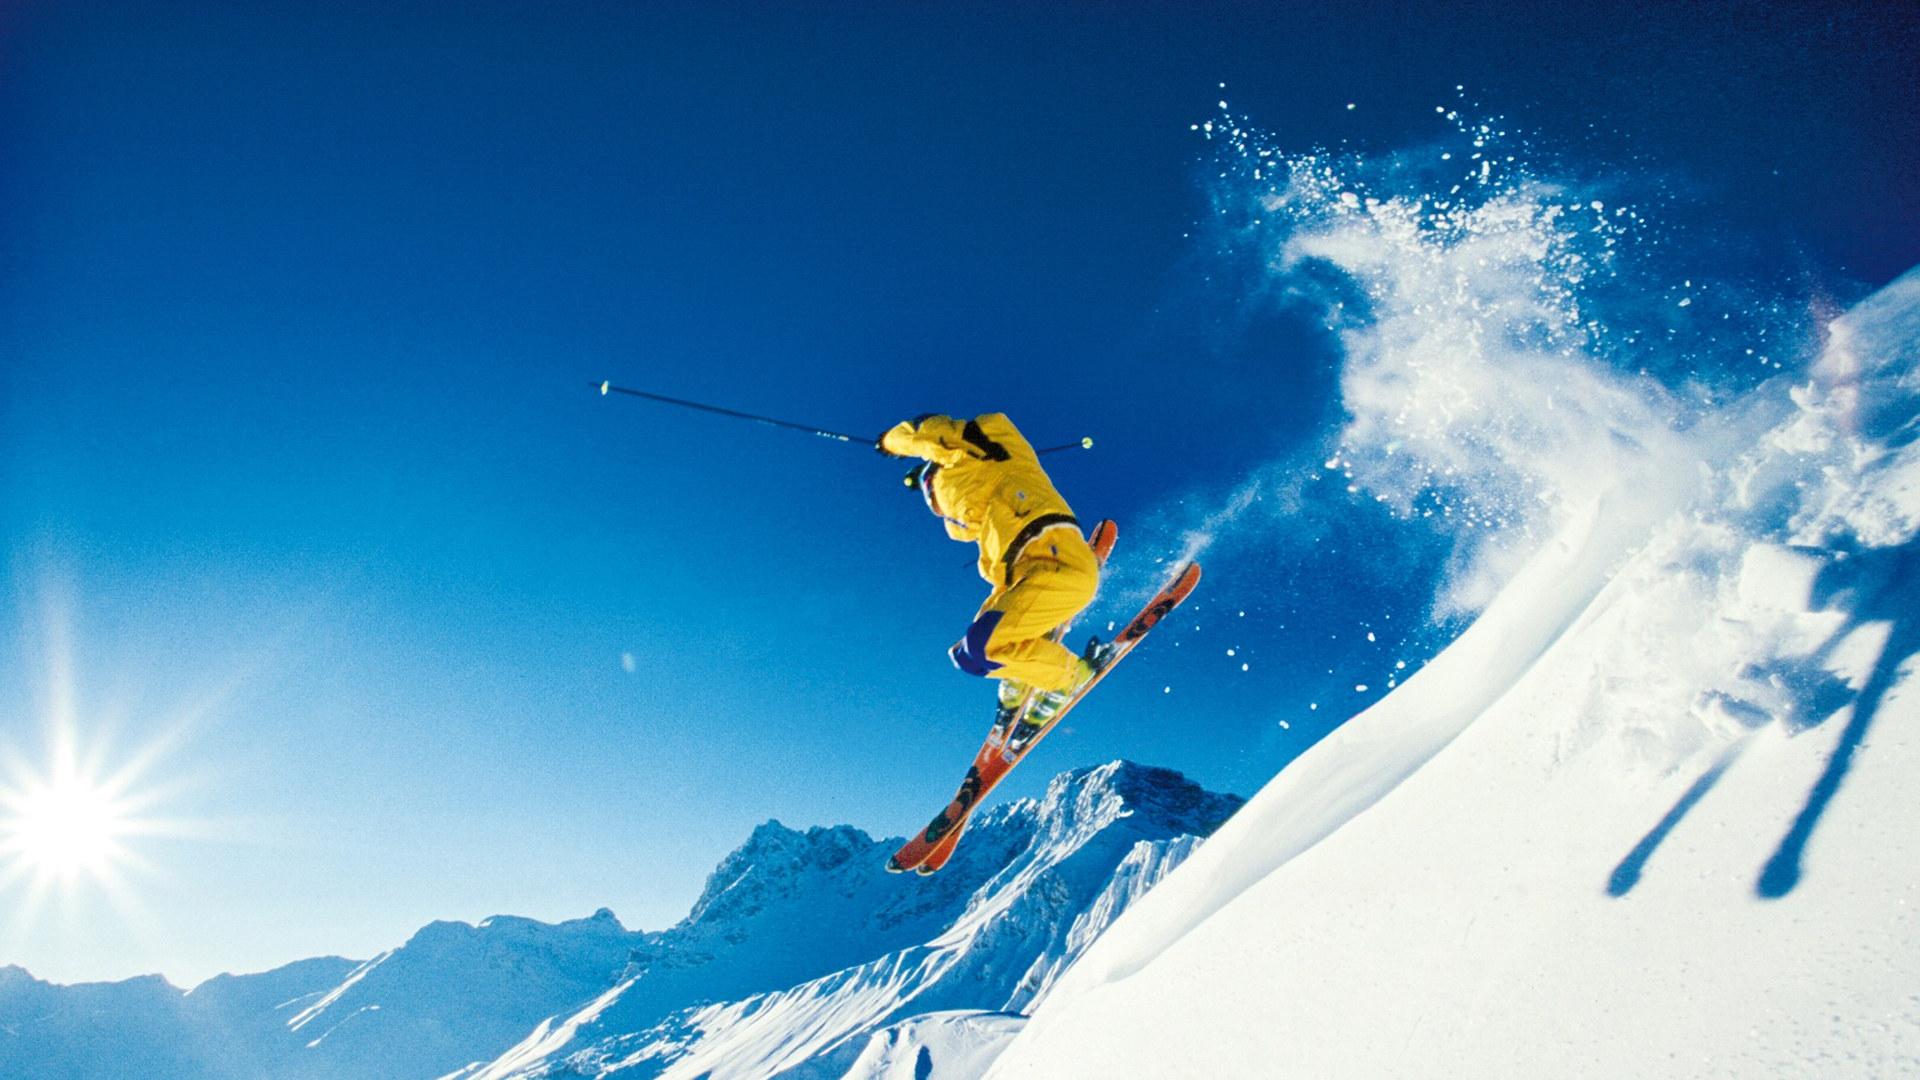 1920x1080 Mountain skiing - Alps holiday wallpaper Desktop